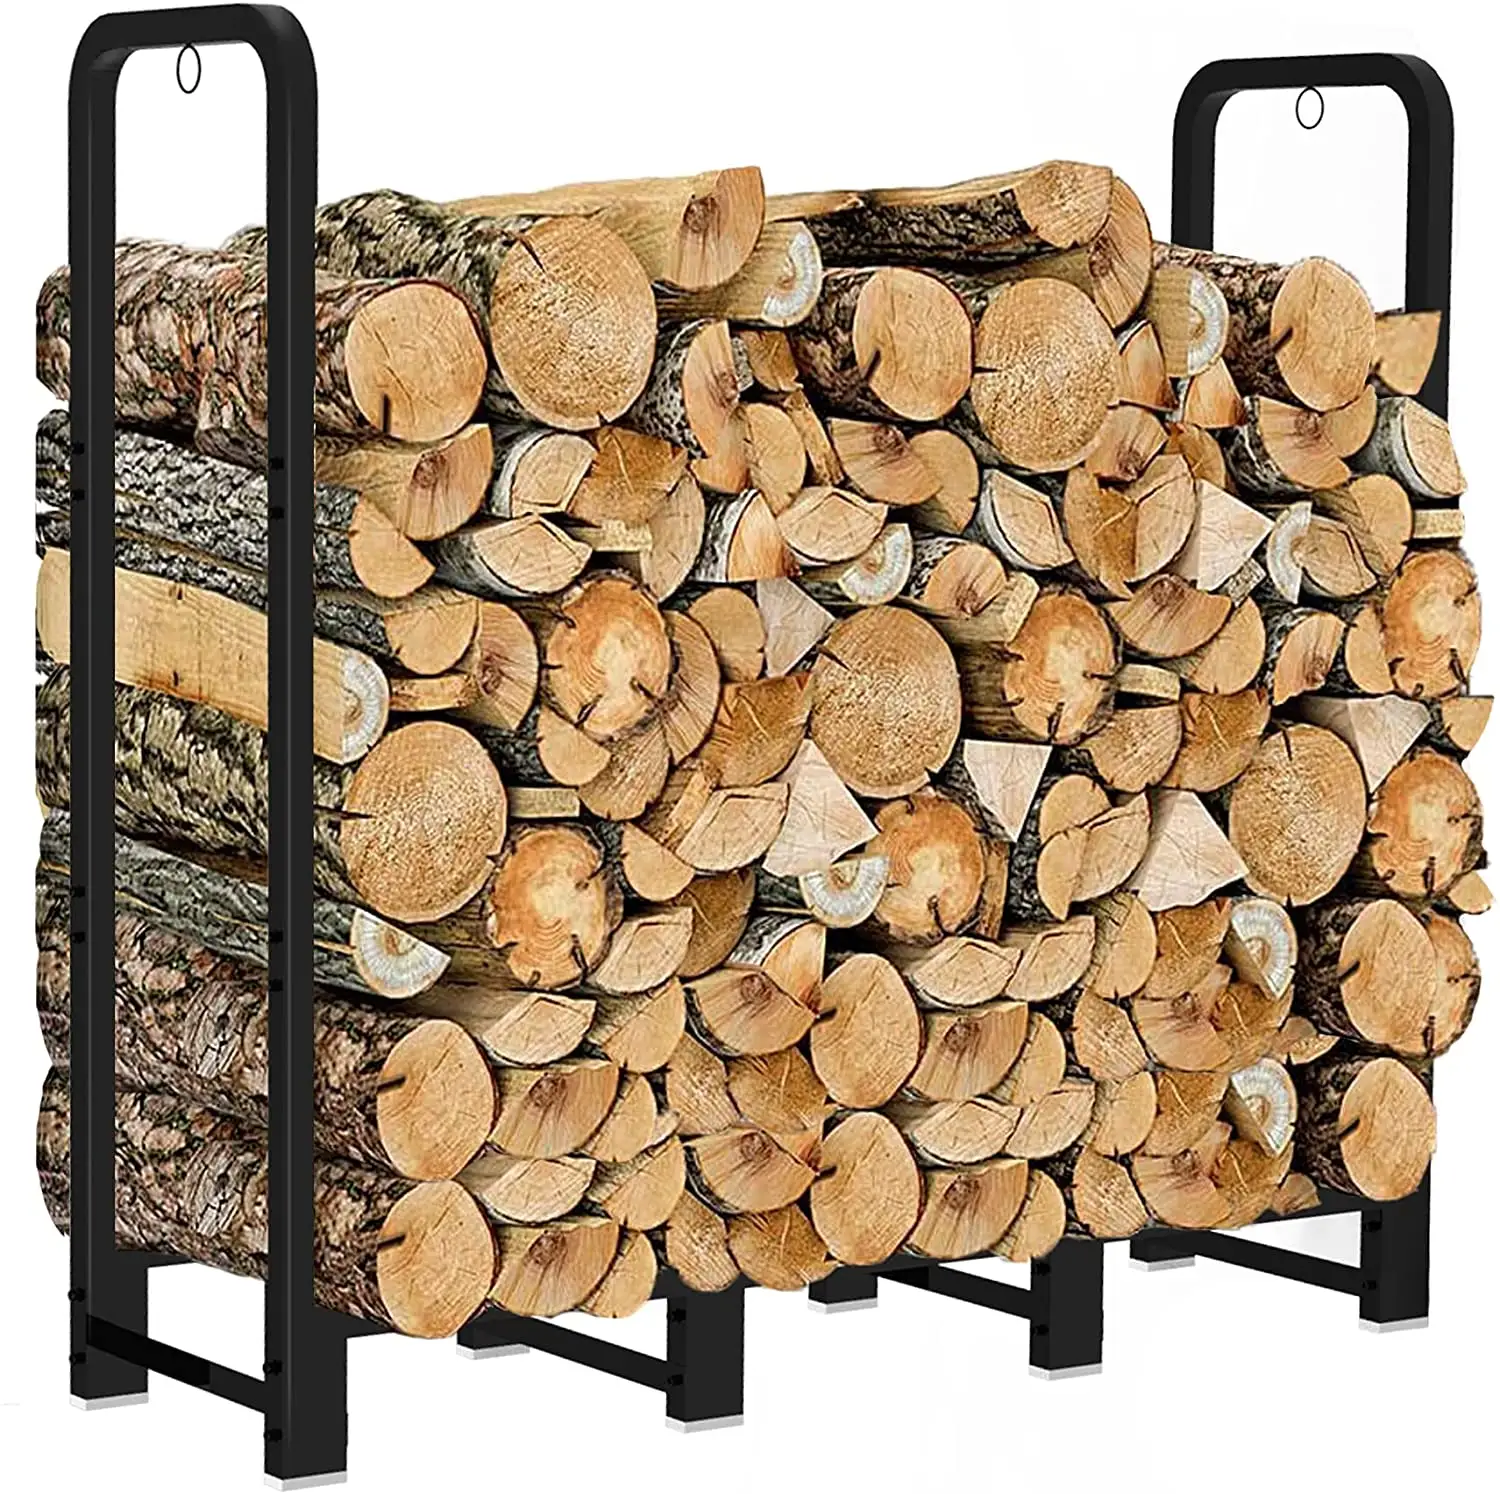 Heavy Duty Fires ide Log Rack Brennholz Rack Stand 4ft Logs Halter für Outdoor Indoor Kamin Metall Holz pfahl Lagerung